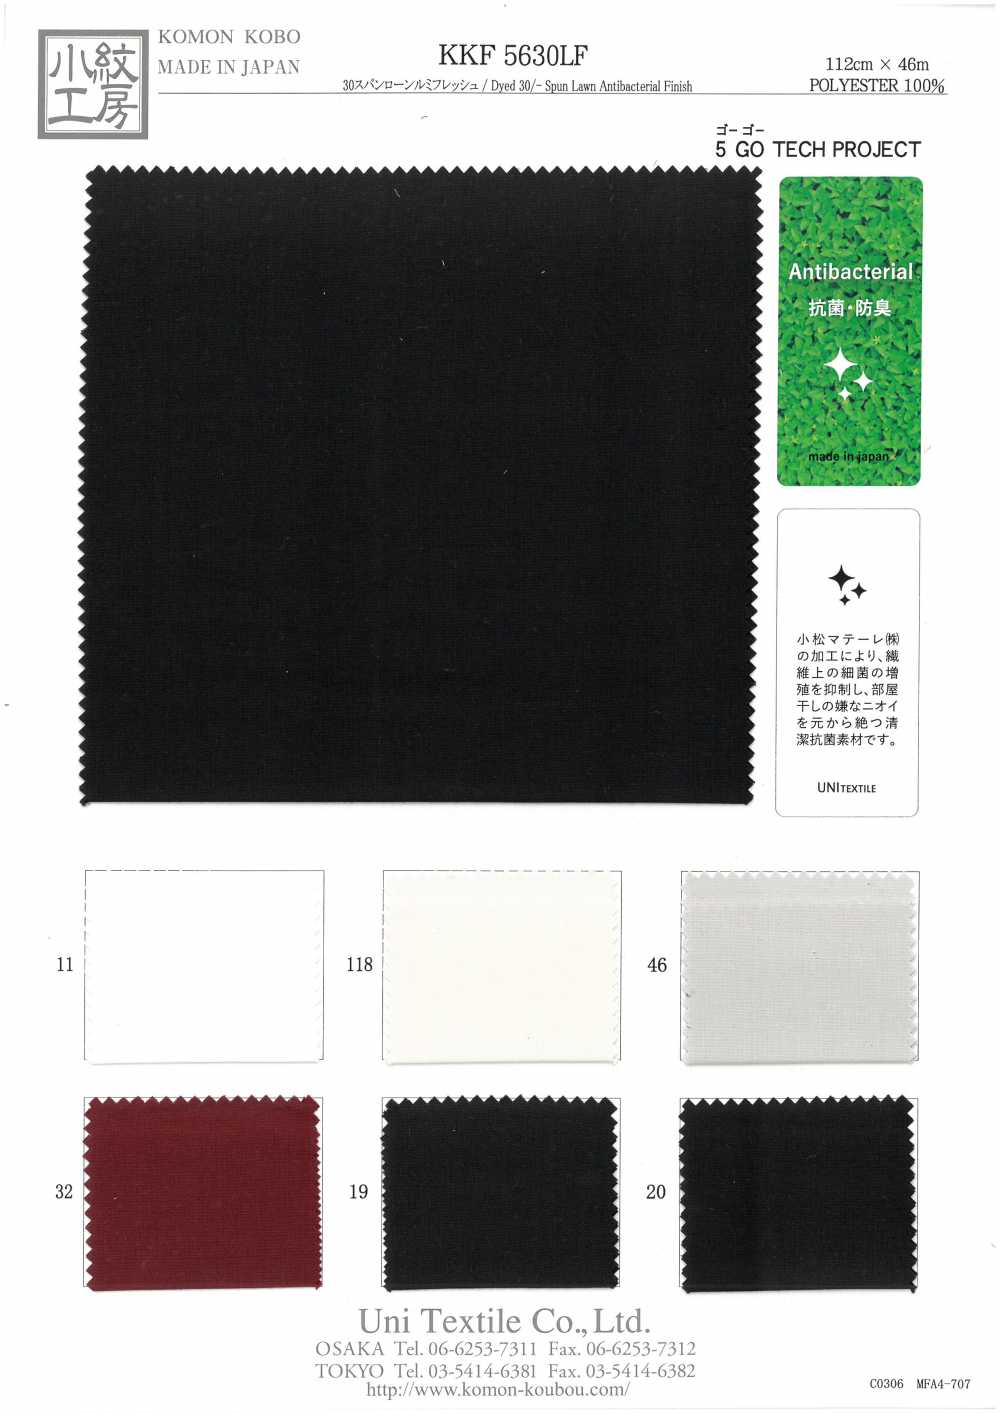 KKF5630LF 30 Spun Lawn Lumi Fresh[Têxtil / Tecido] Uni Textile